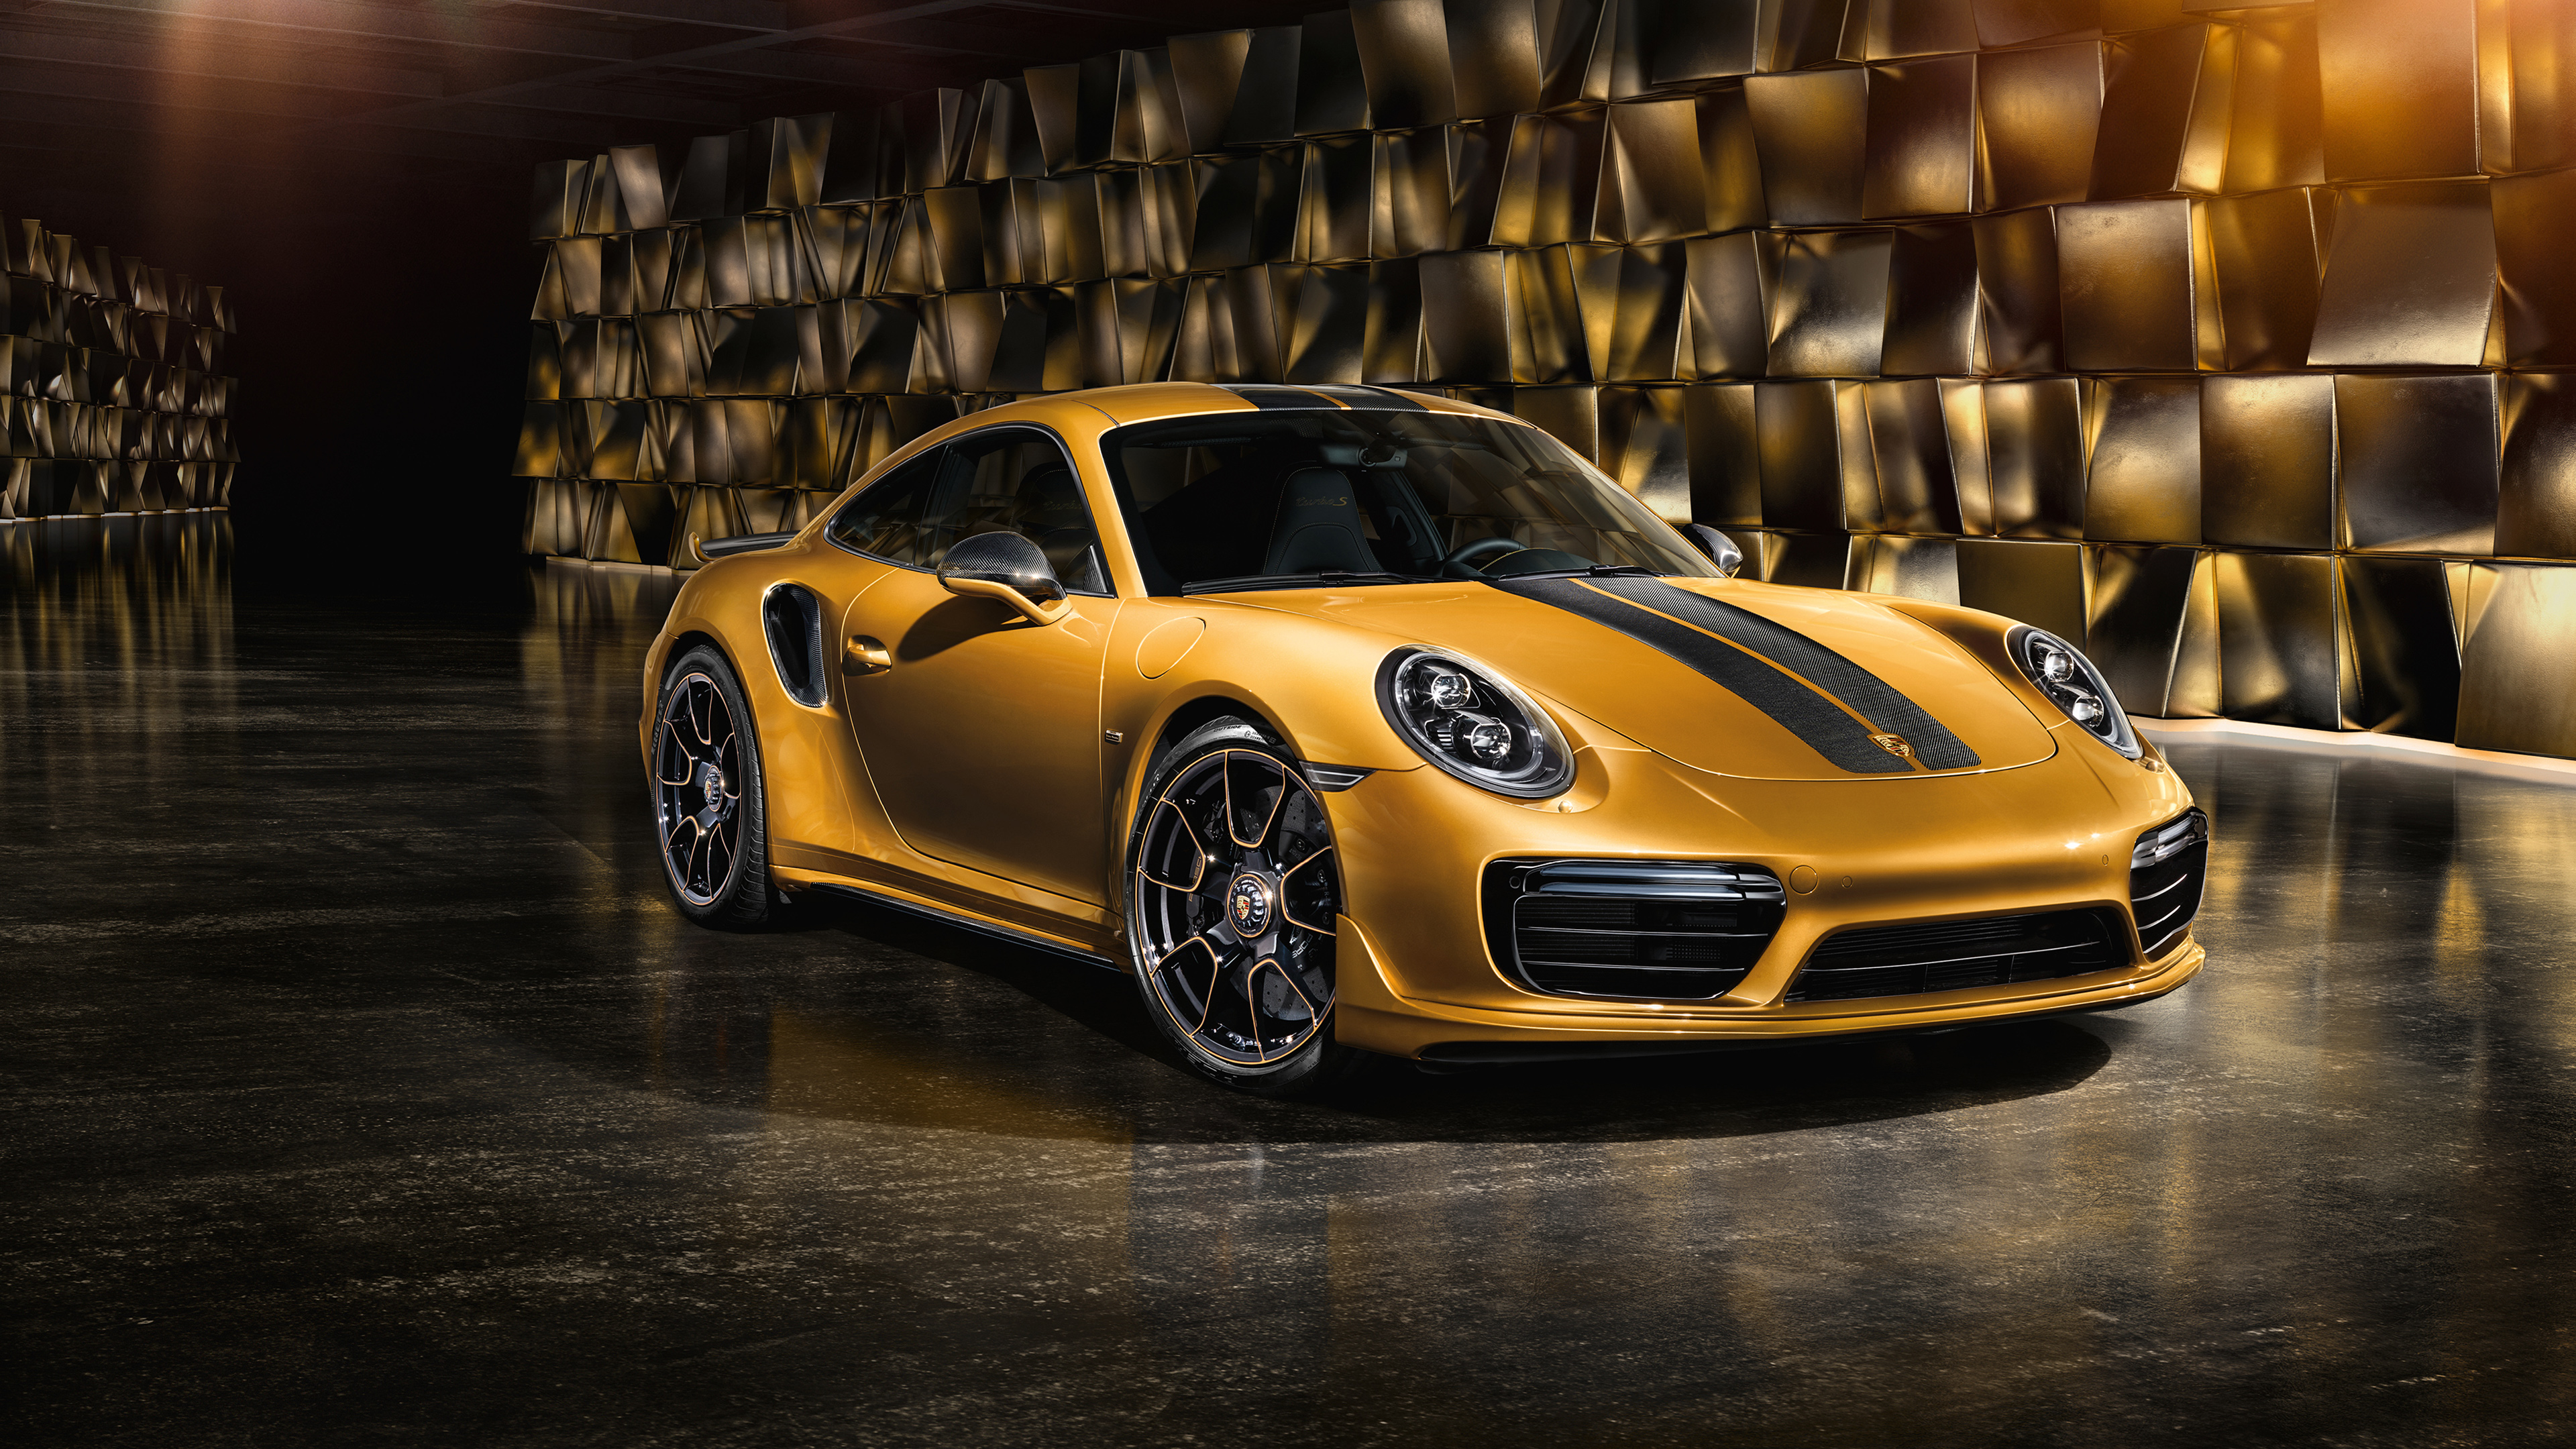 Gt4 gold. Порше 911 золотой. Спорткар Порше 911. Porsche 911 Turbo s 4k. Porsche 911 Turbo s спорткар.